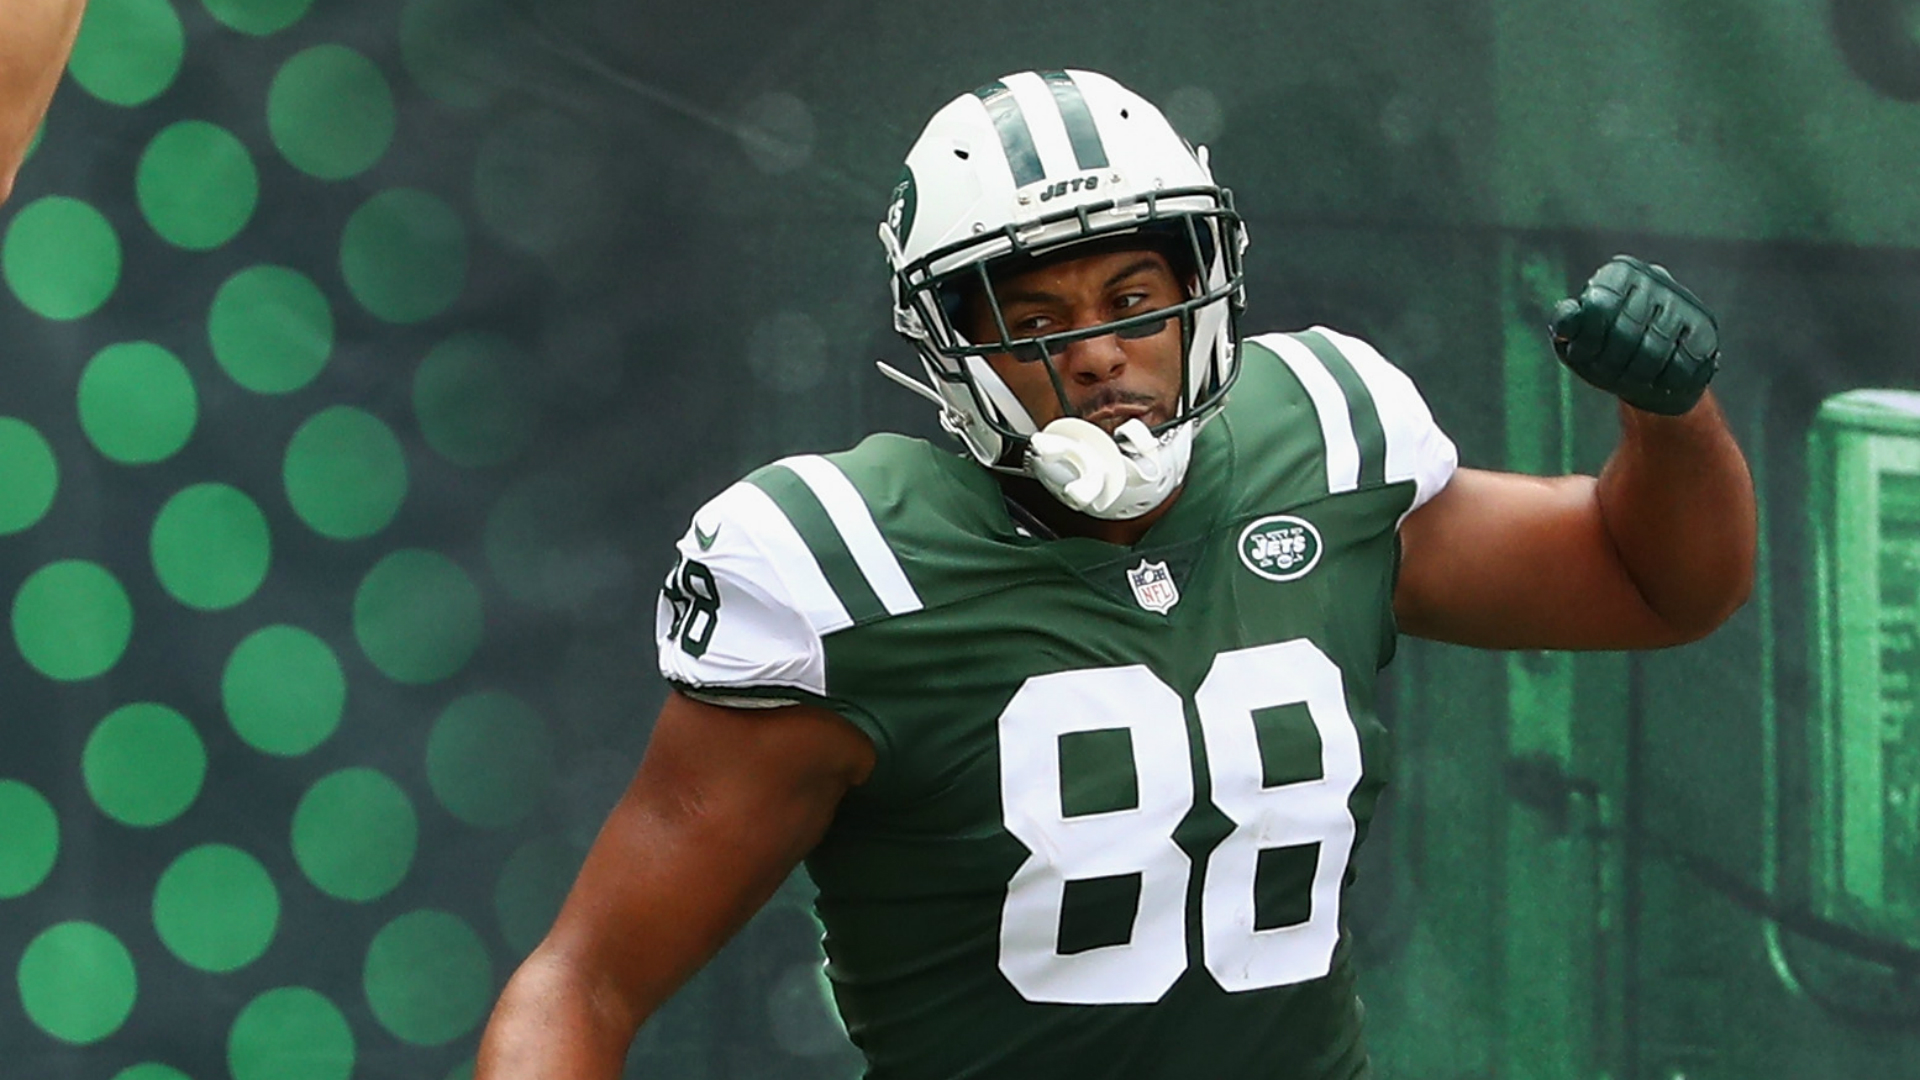 NFL fans upset after refs overturn controversial TD by Jets' Austin Seferian-Jenkins